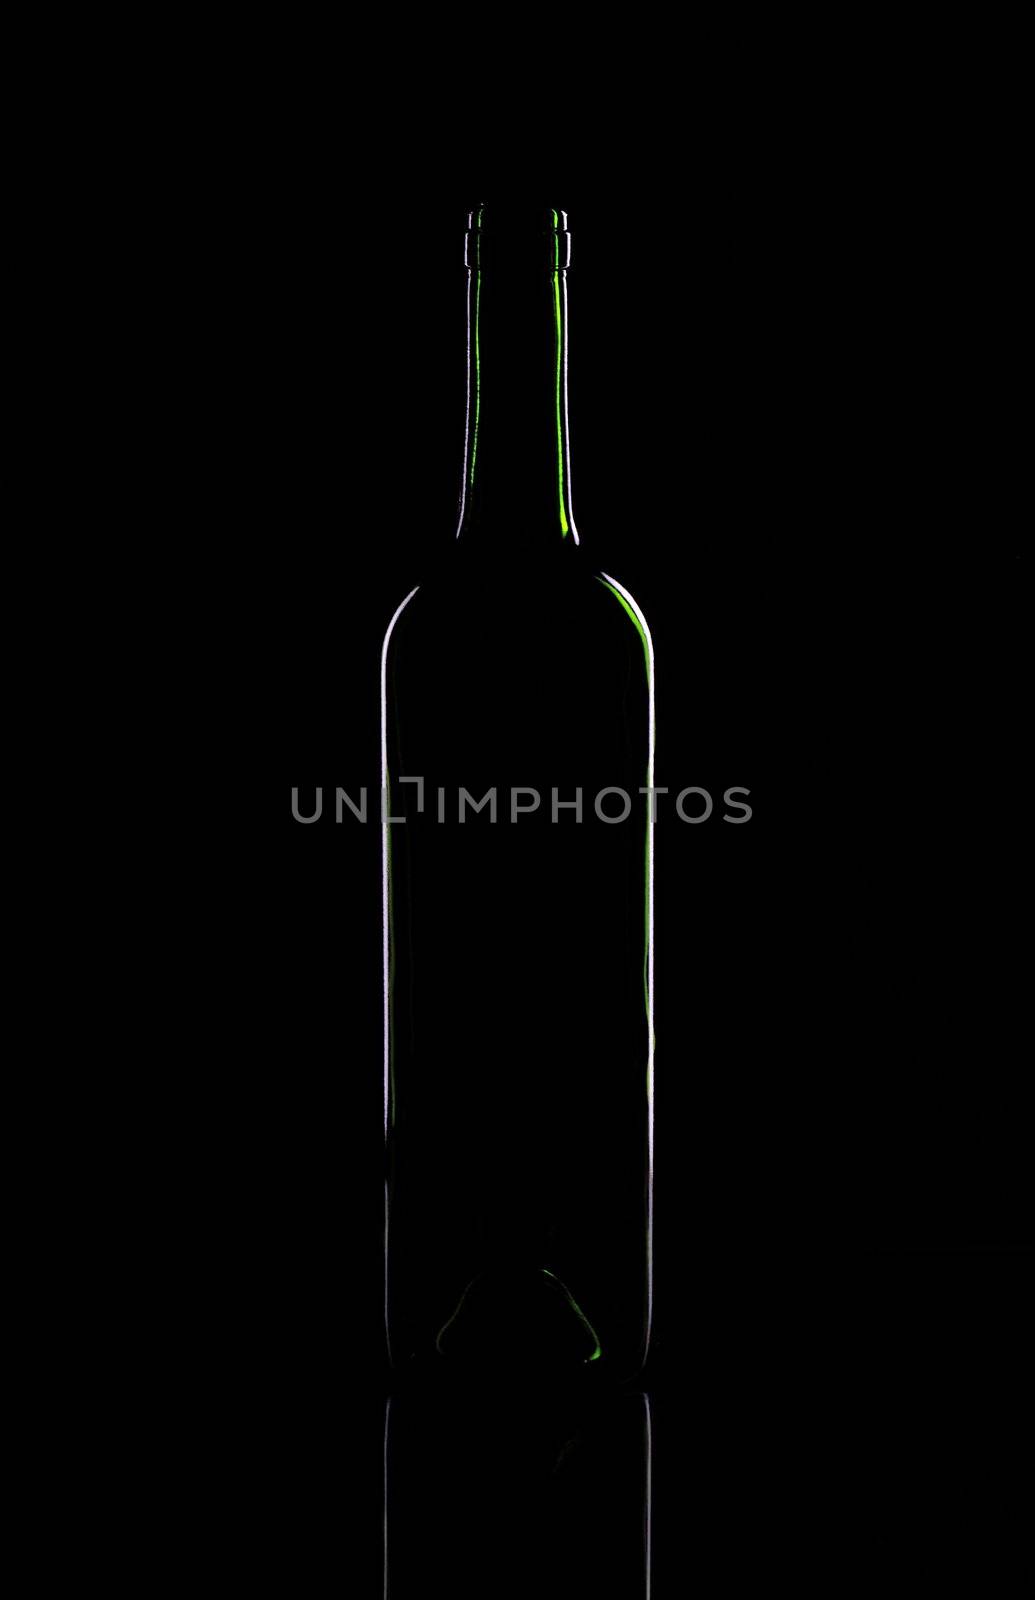 One wine bottle on a black background